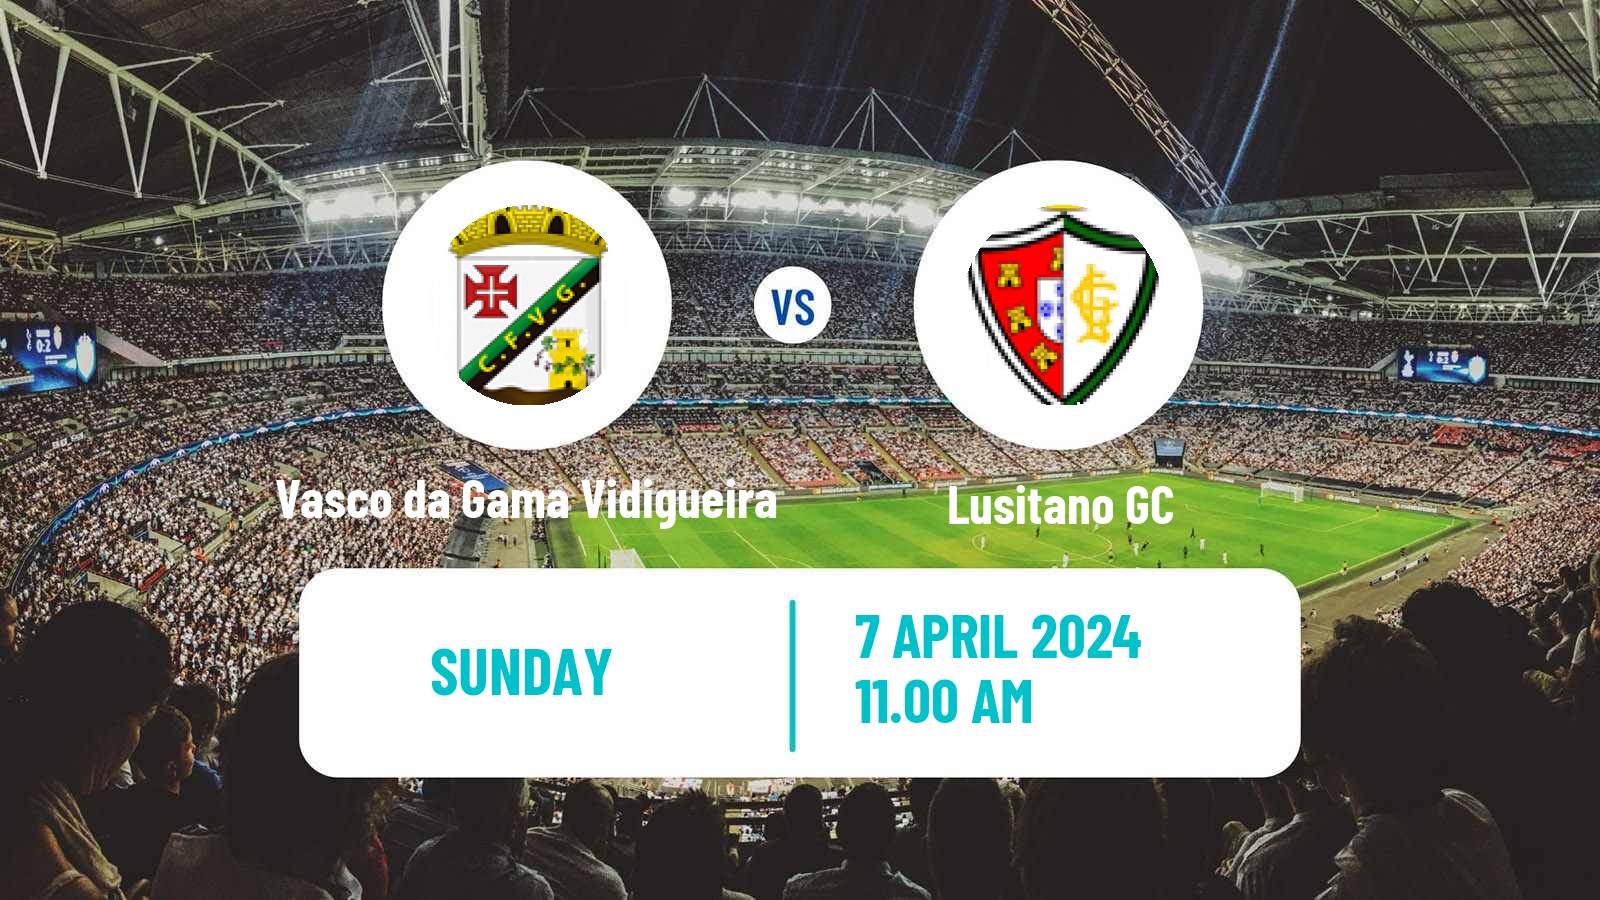 Soccer Campeonato de Portugal - Group D Vasco da Gama Vidigueira - Lusitano GC